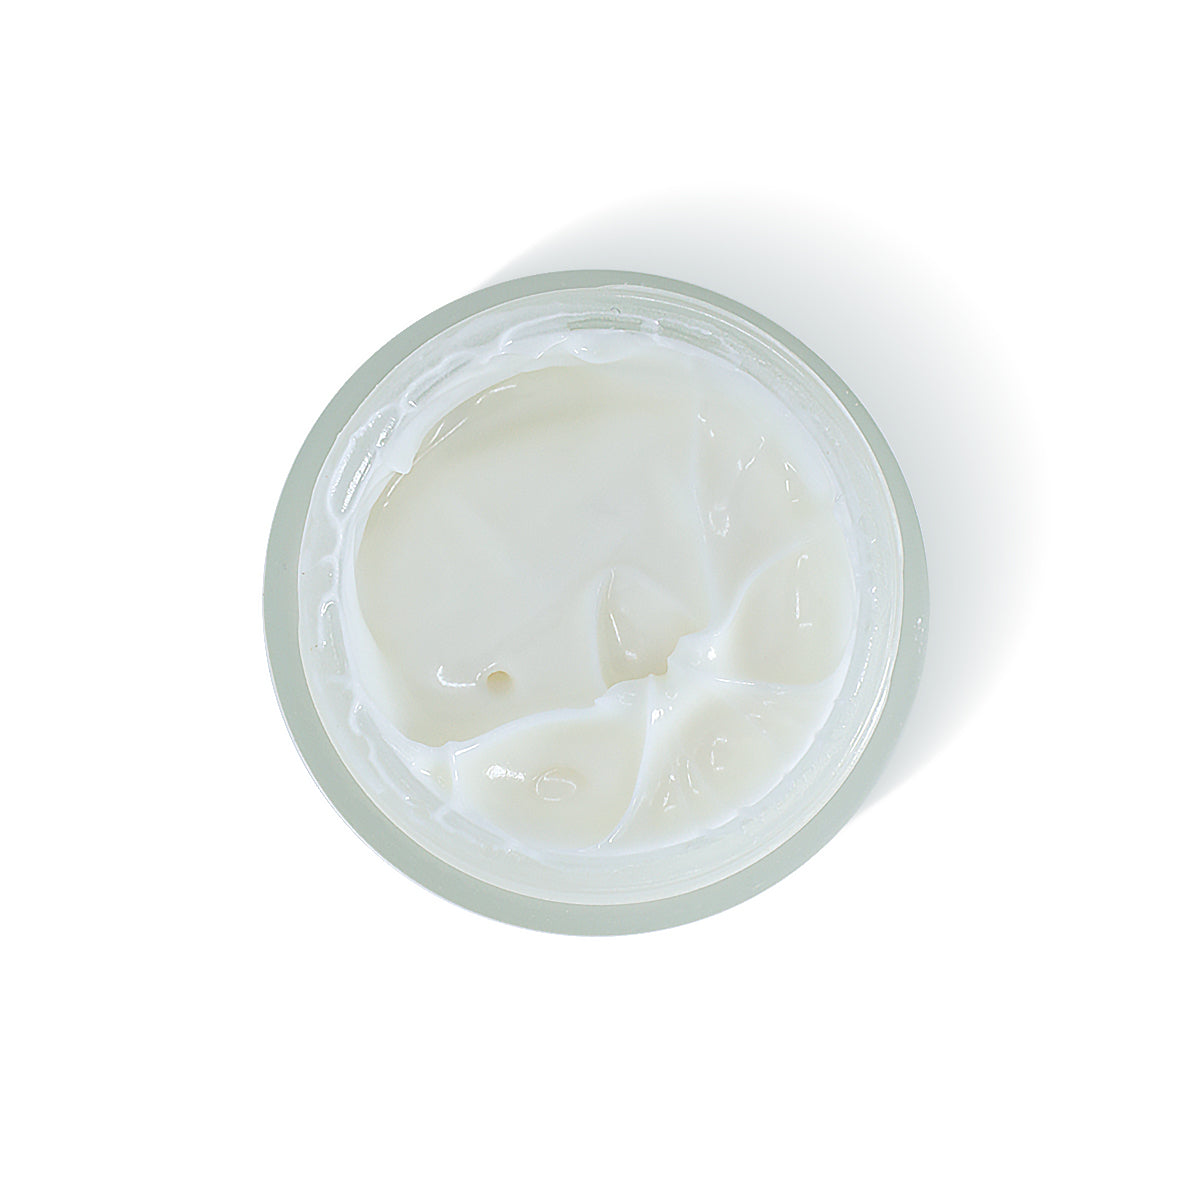 Omic+ Vitamin C Cream 20% L-Ascorbic Acid 50ml Jar Mitchell Brands - Mitchell Brands - Skin Lightening, Skin Brightening, Fade Dark Spots, Shea Butter, Hair Growth Products